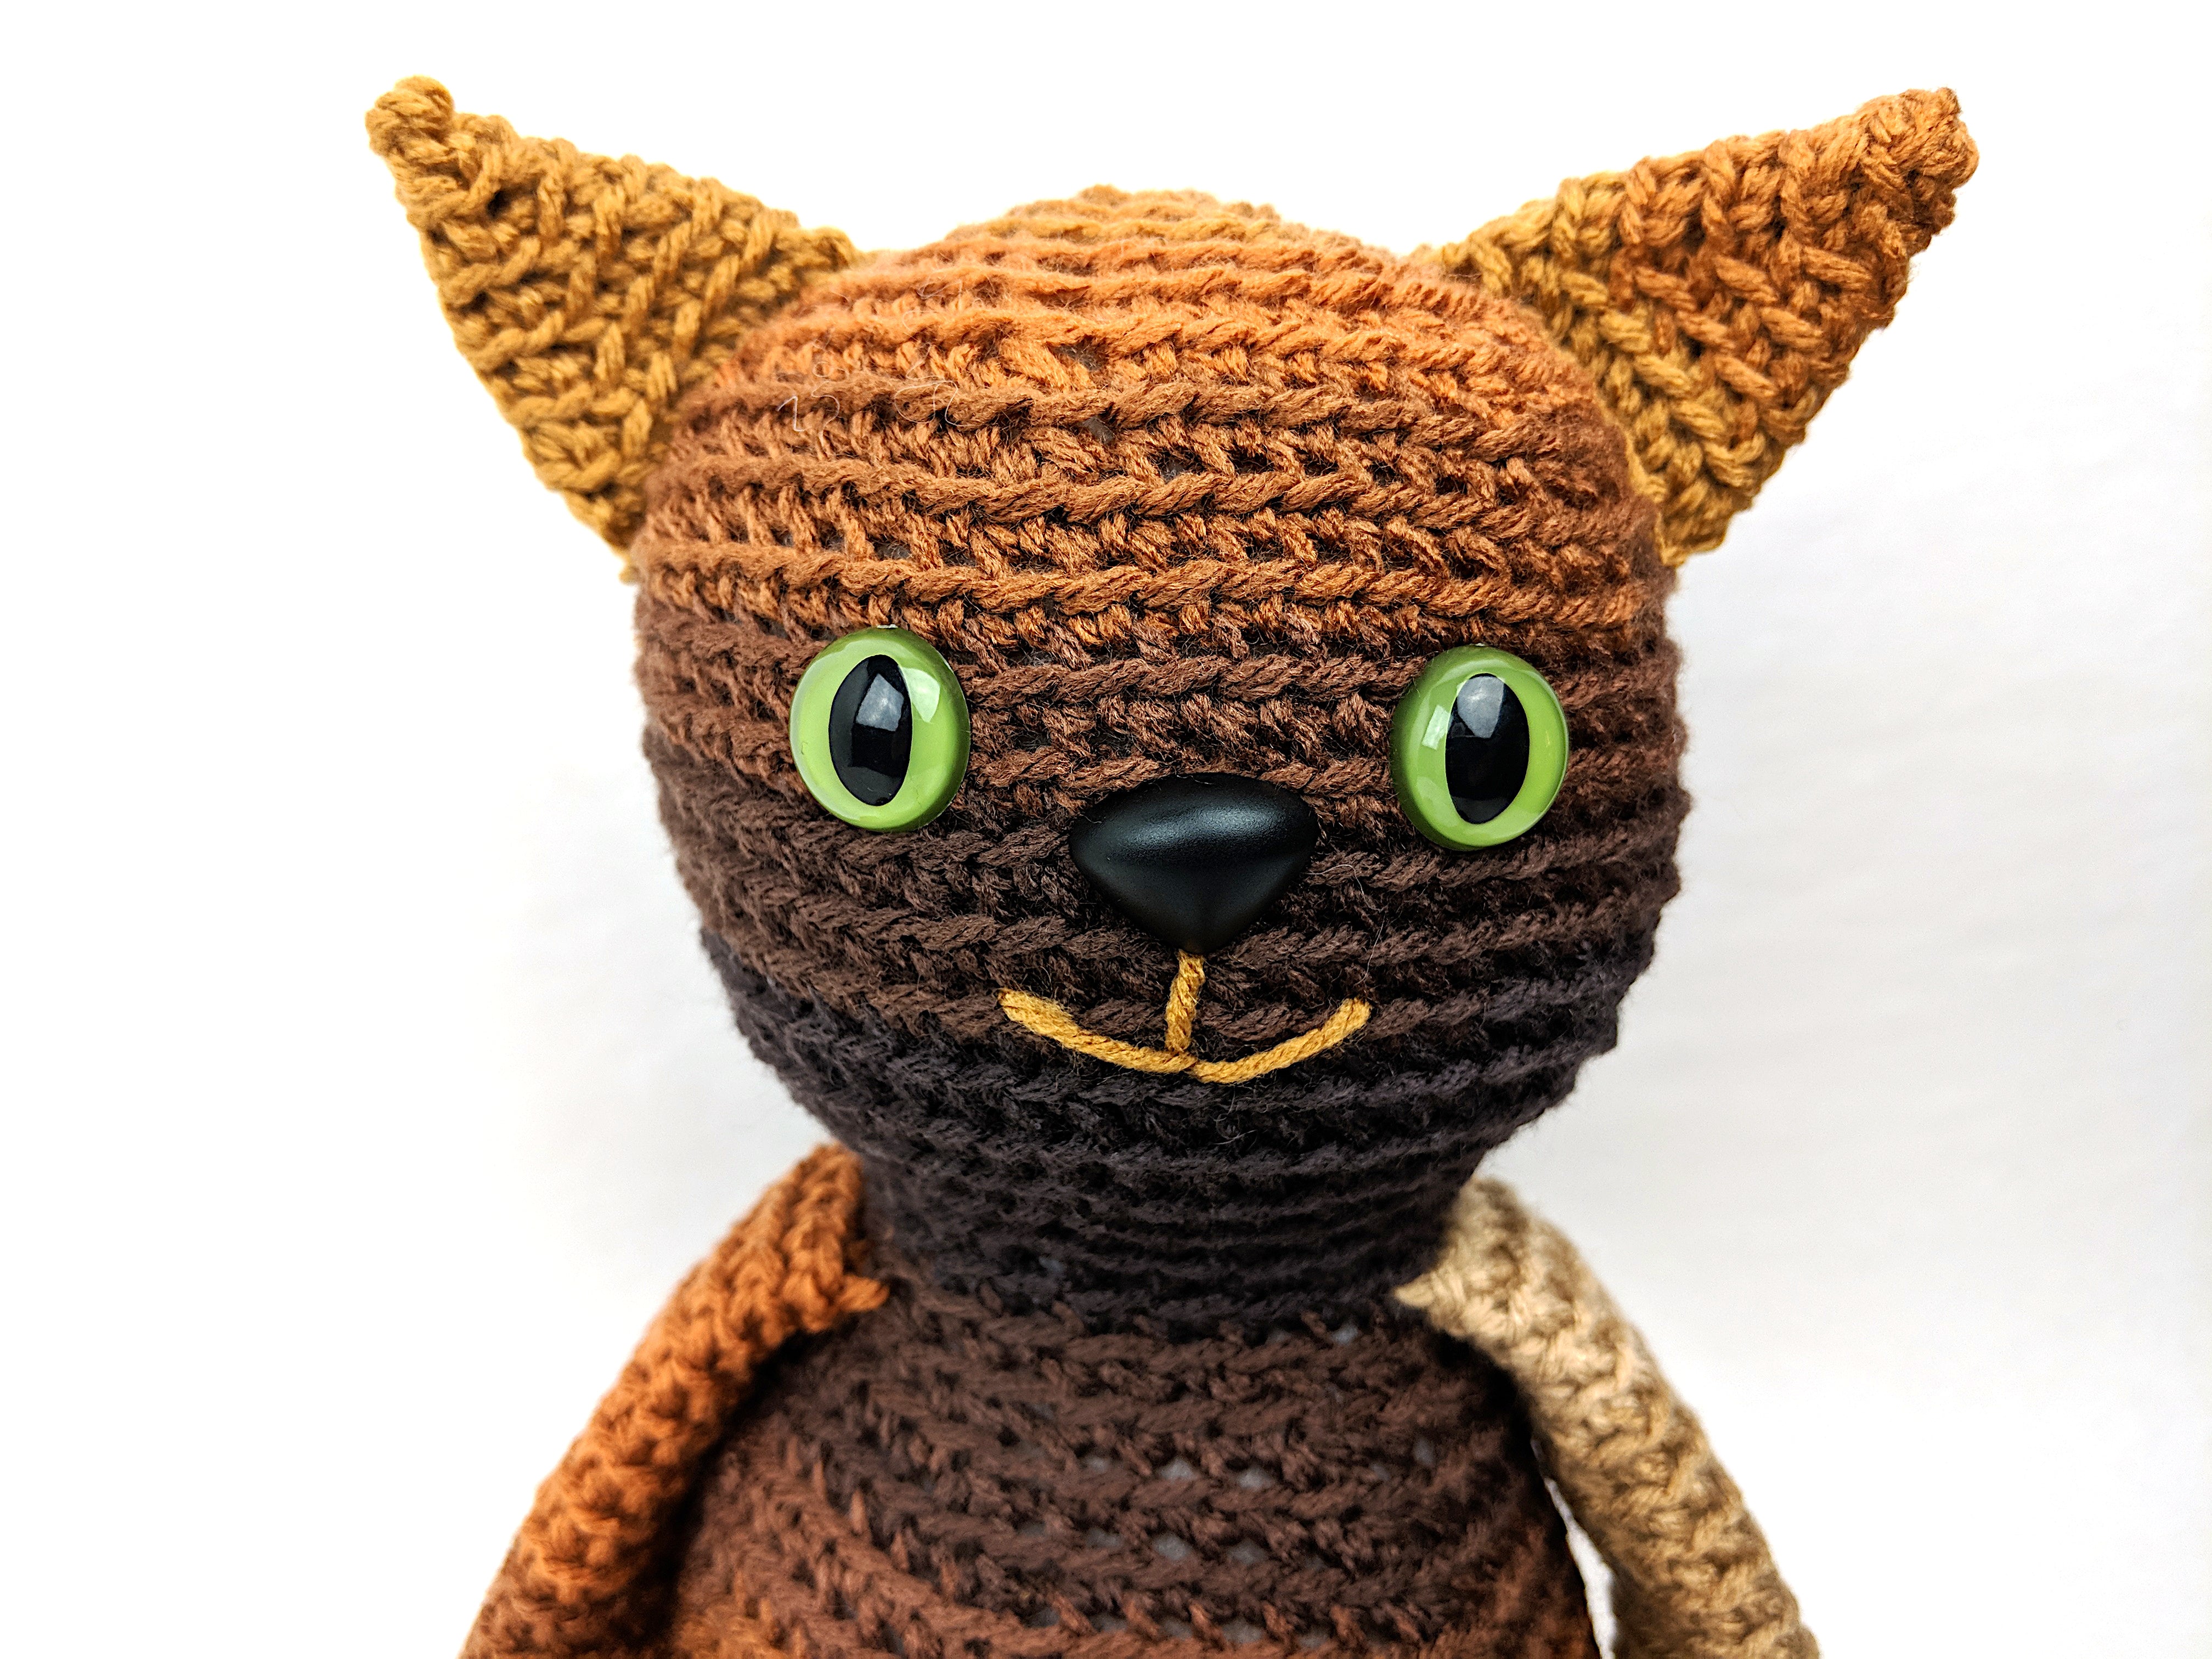 Cooper Cat Crochet Amigurumi Pattern